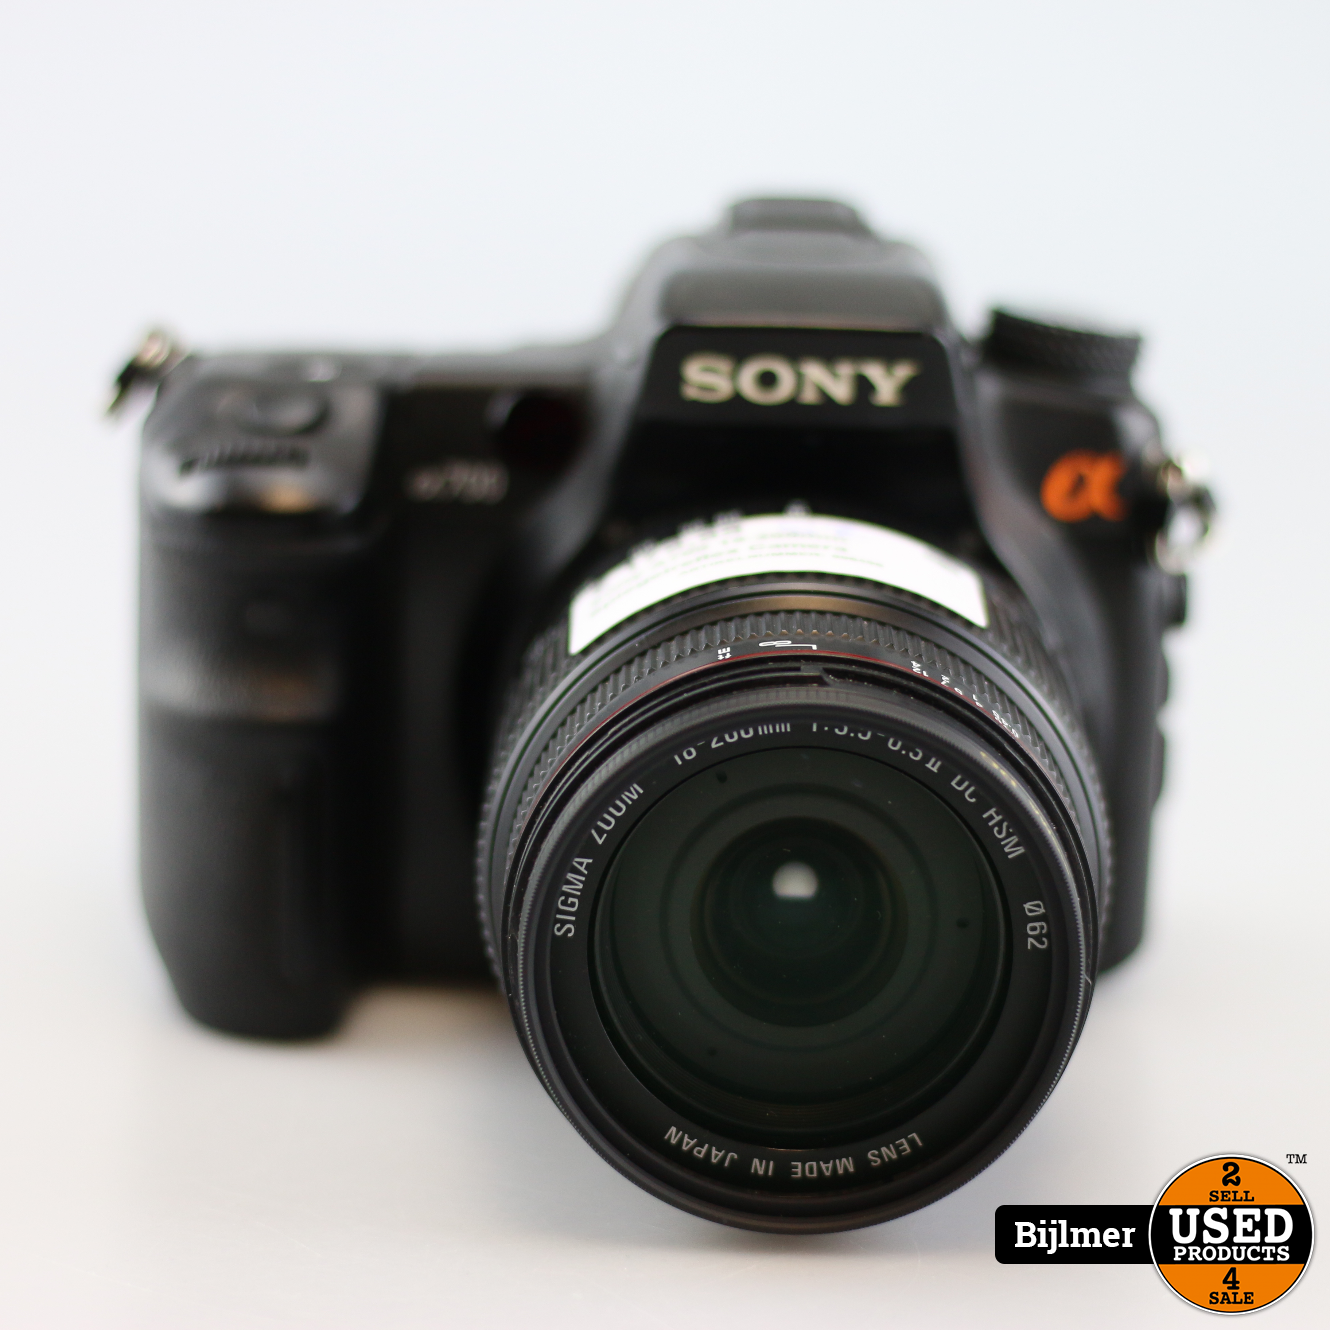 Herformuleren geest Continent Sony A700 18-200mm Spiegelreflex Camera - Used Products Amsterdam Bijlmer